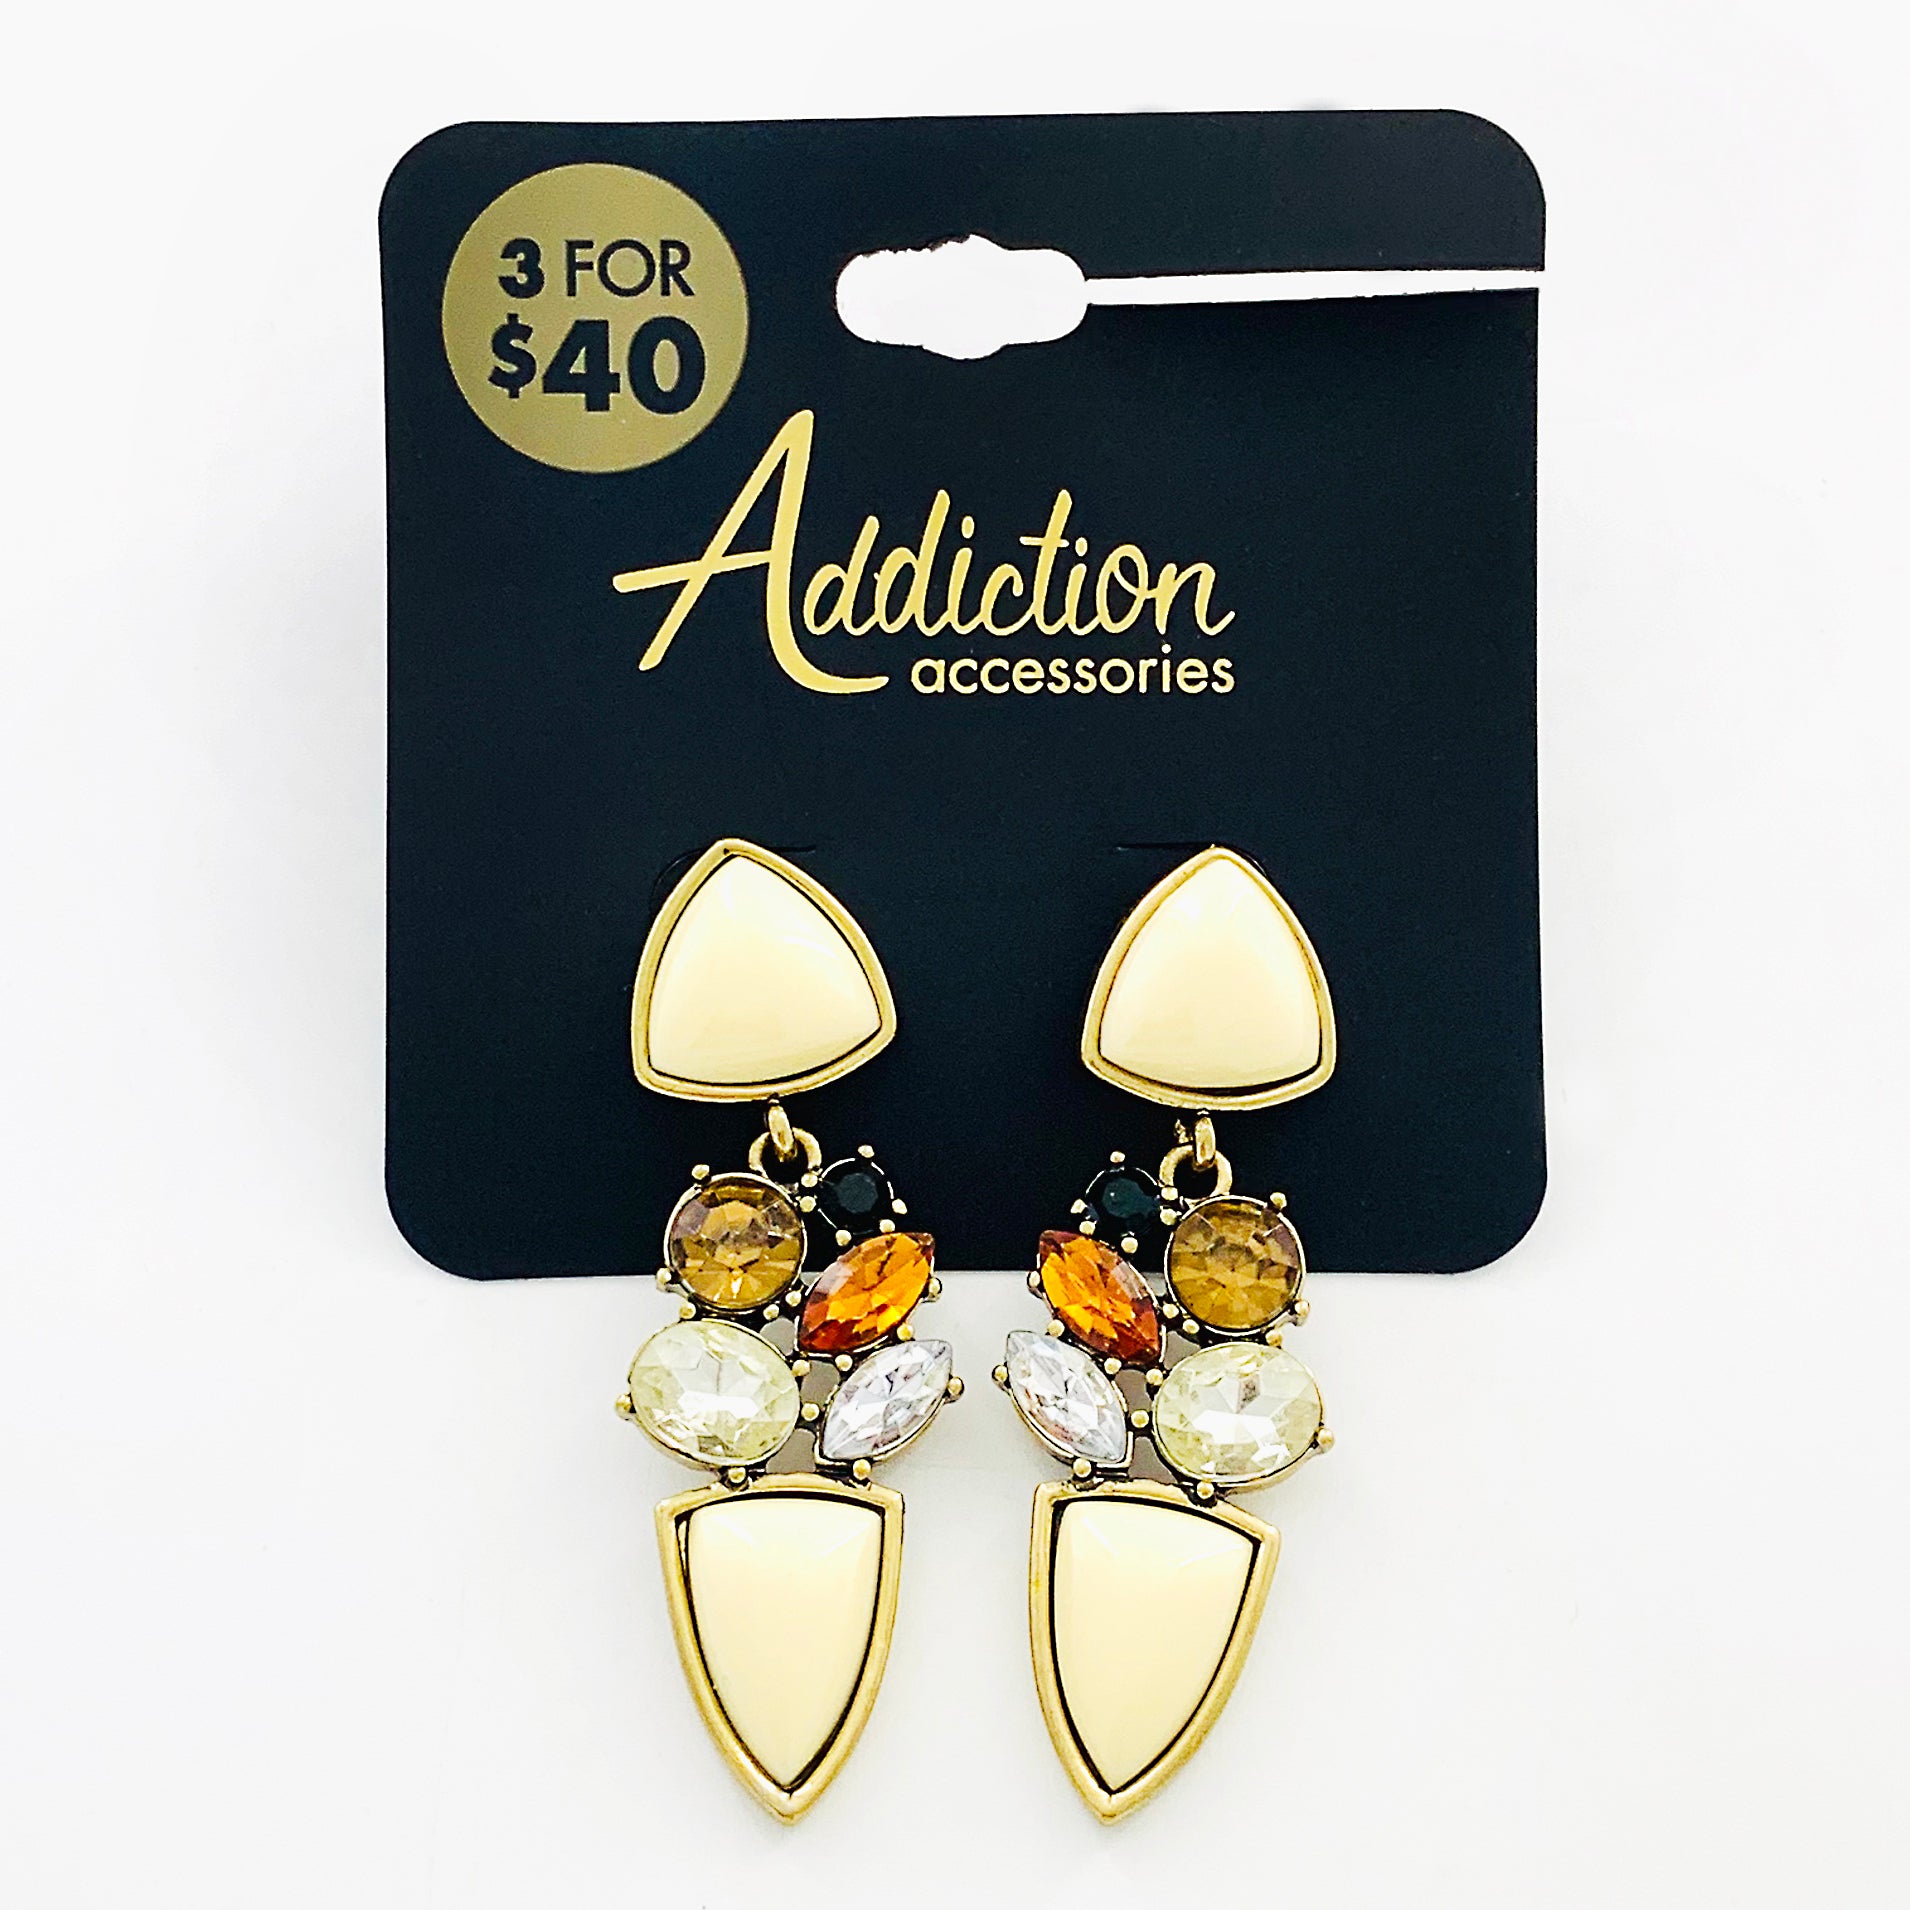 Earrings with white, brown, orange stones